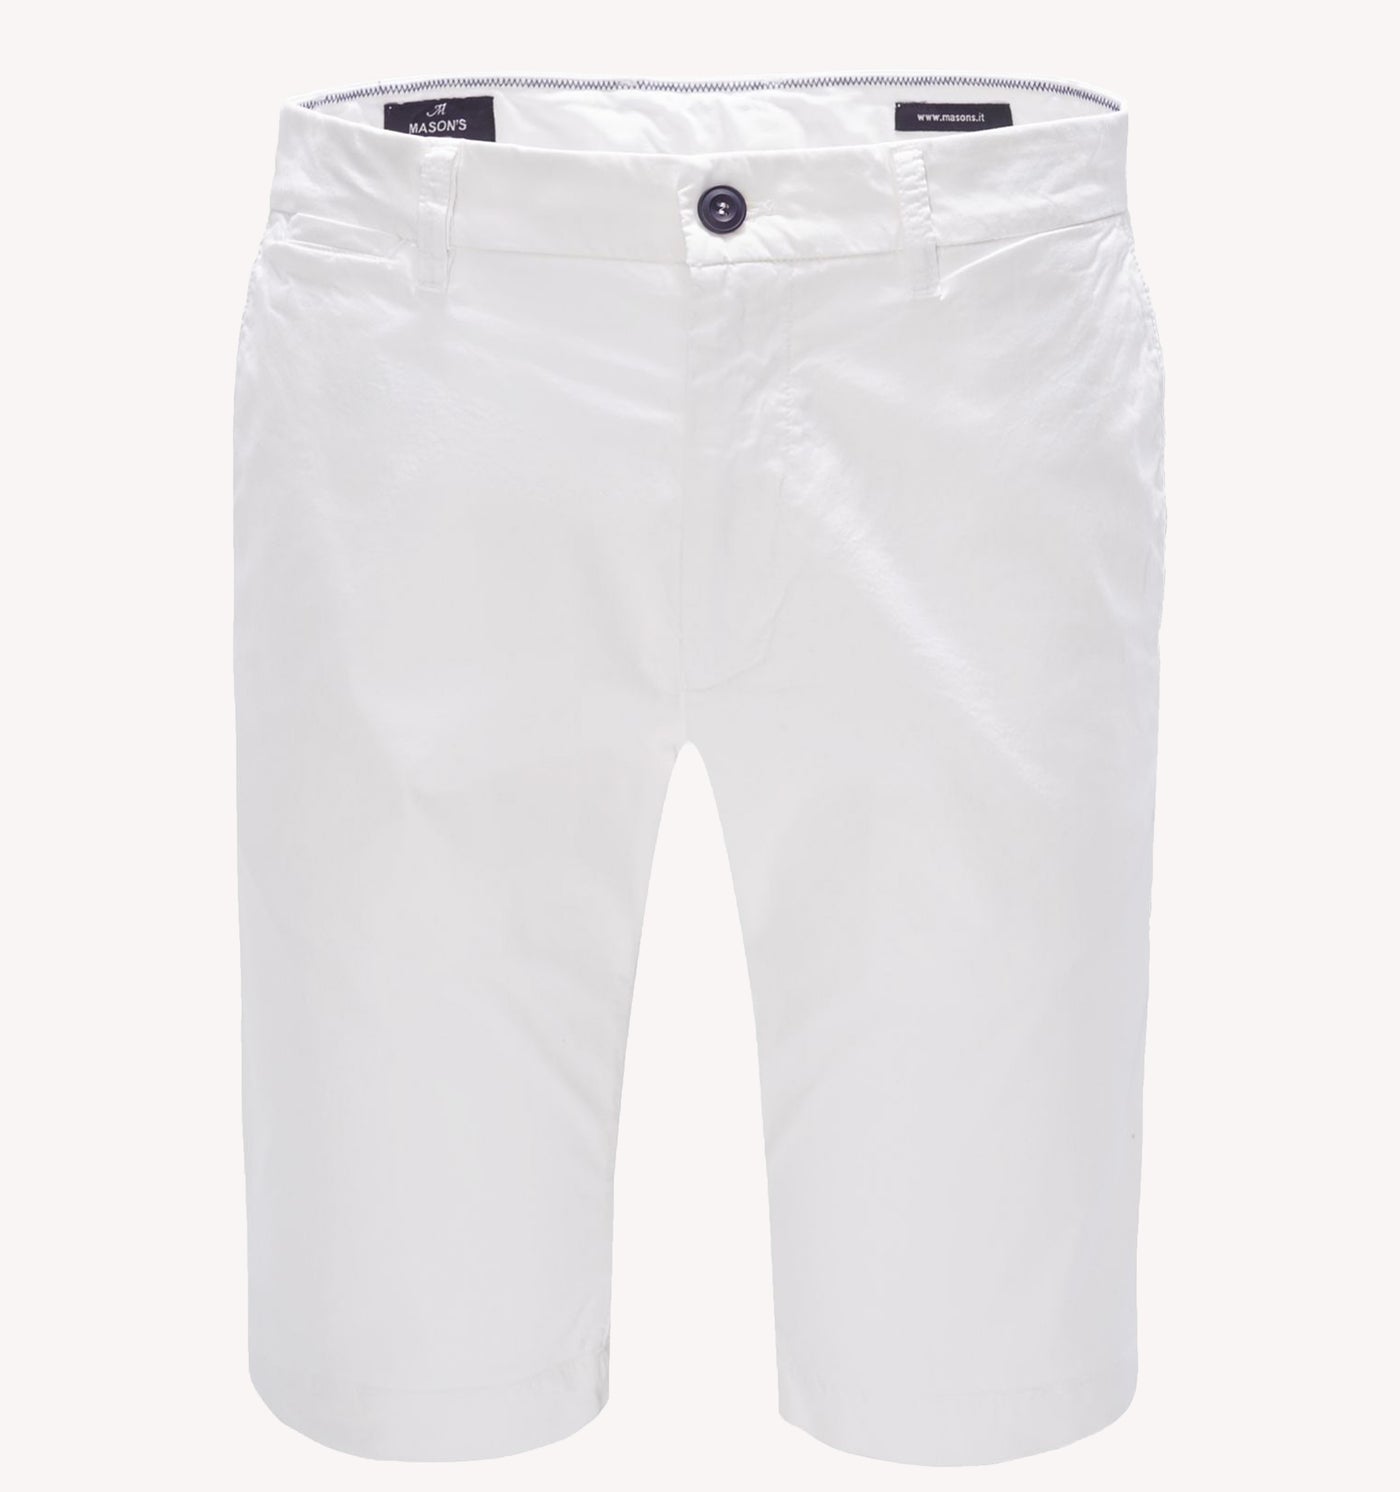 Mason's London Chino Bermuda Shorts in White